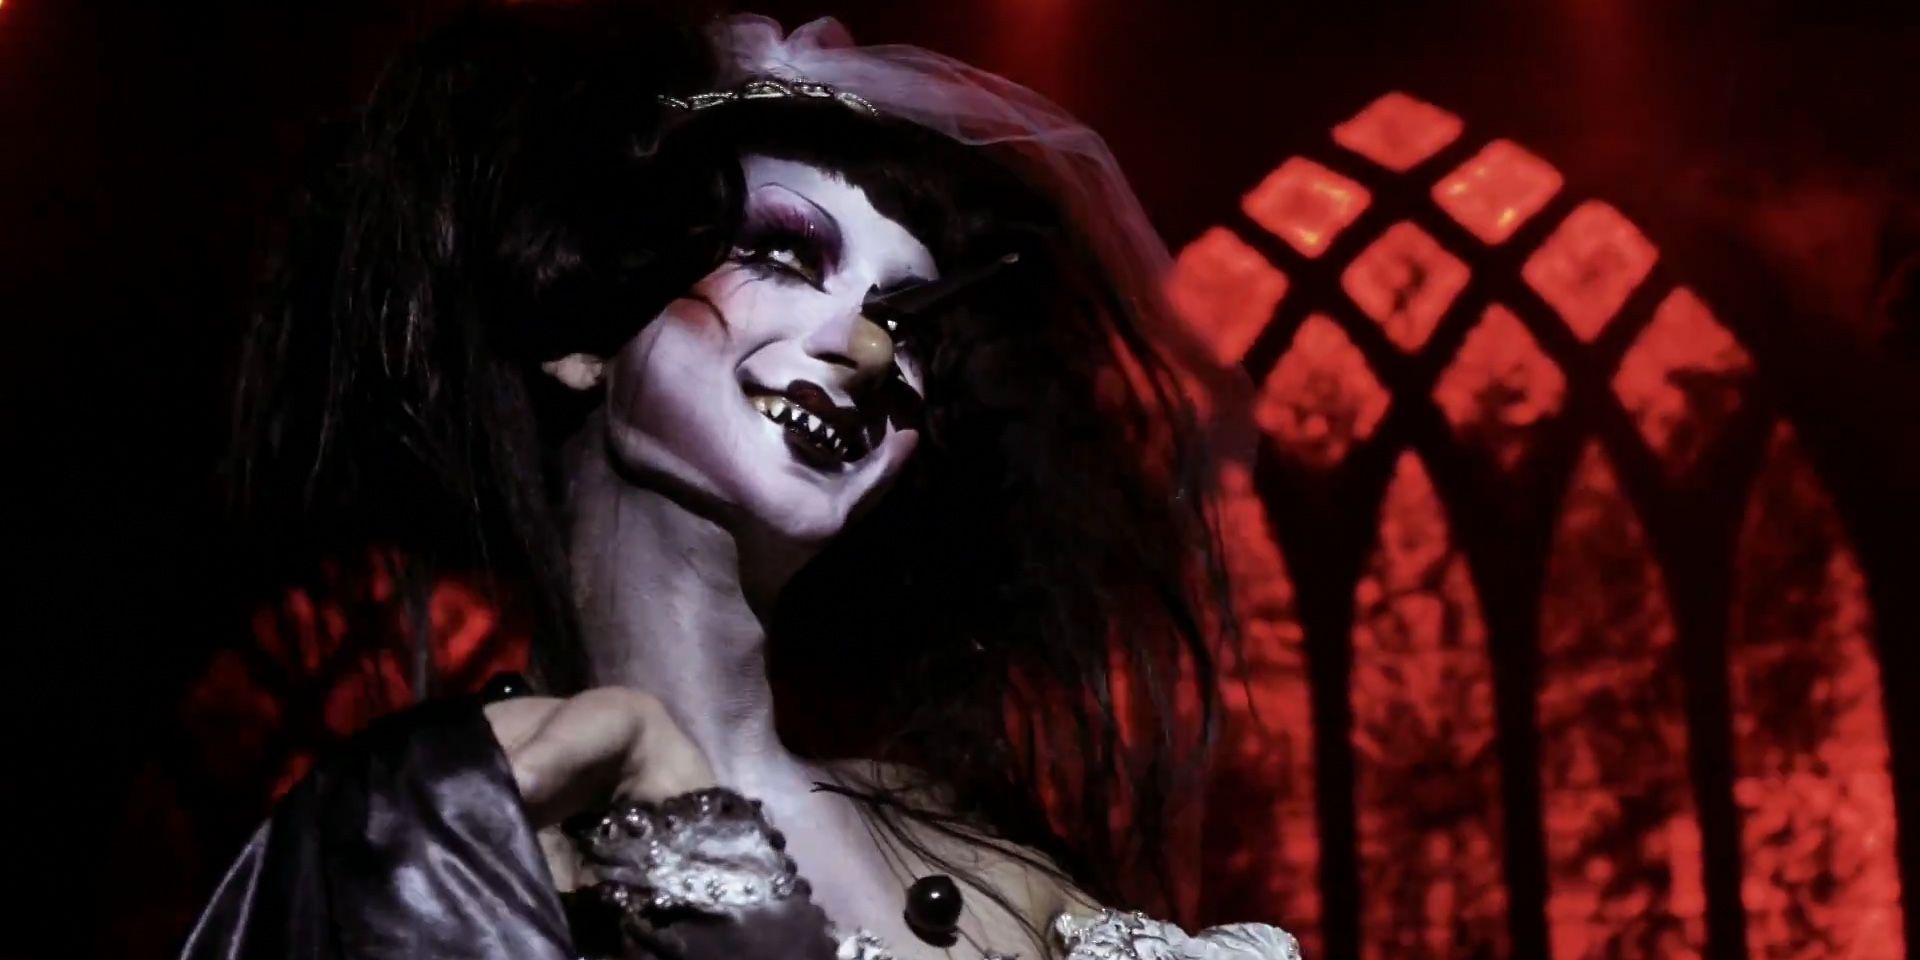 One of drag queen Abhora's horror looks